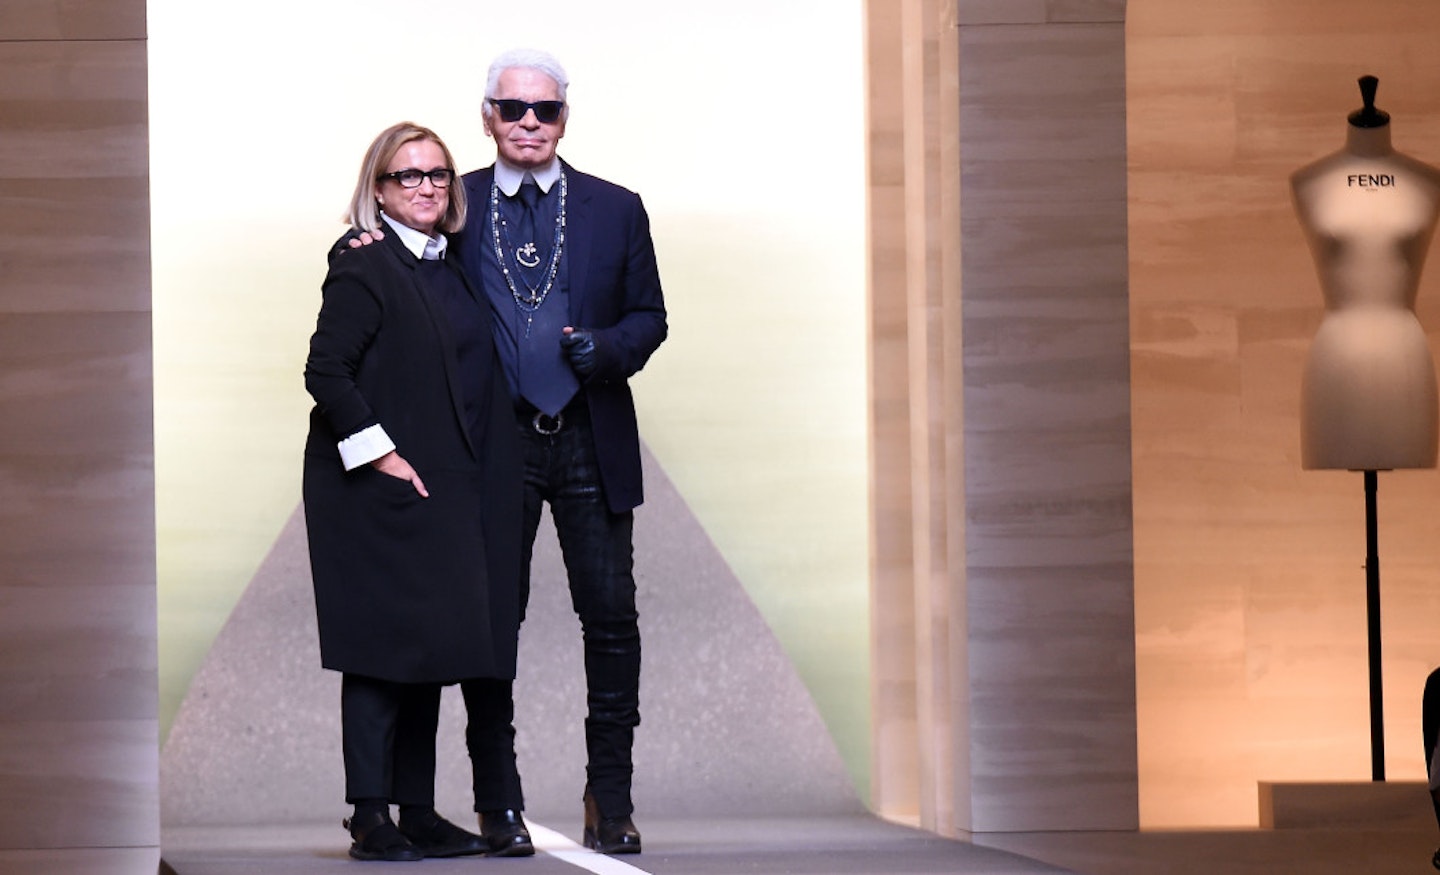 Karl Lagerfeld and Silvia Venturini Fendi at Milan Fashion Week 2014 [Getty]